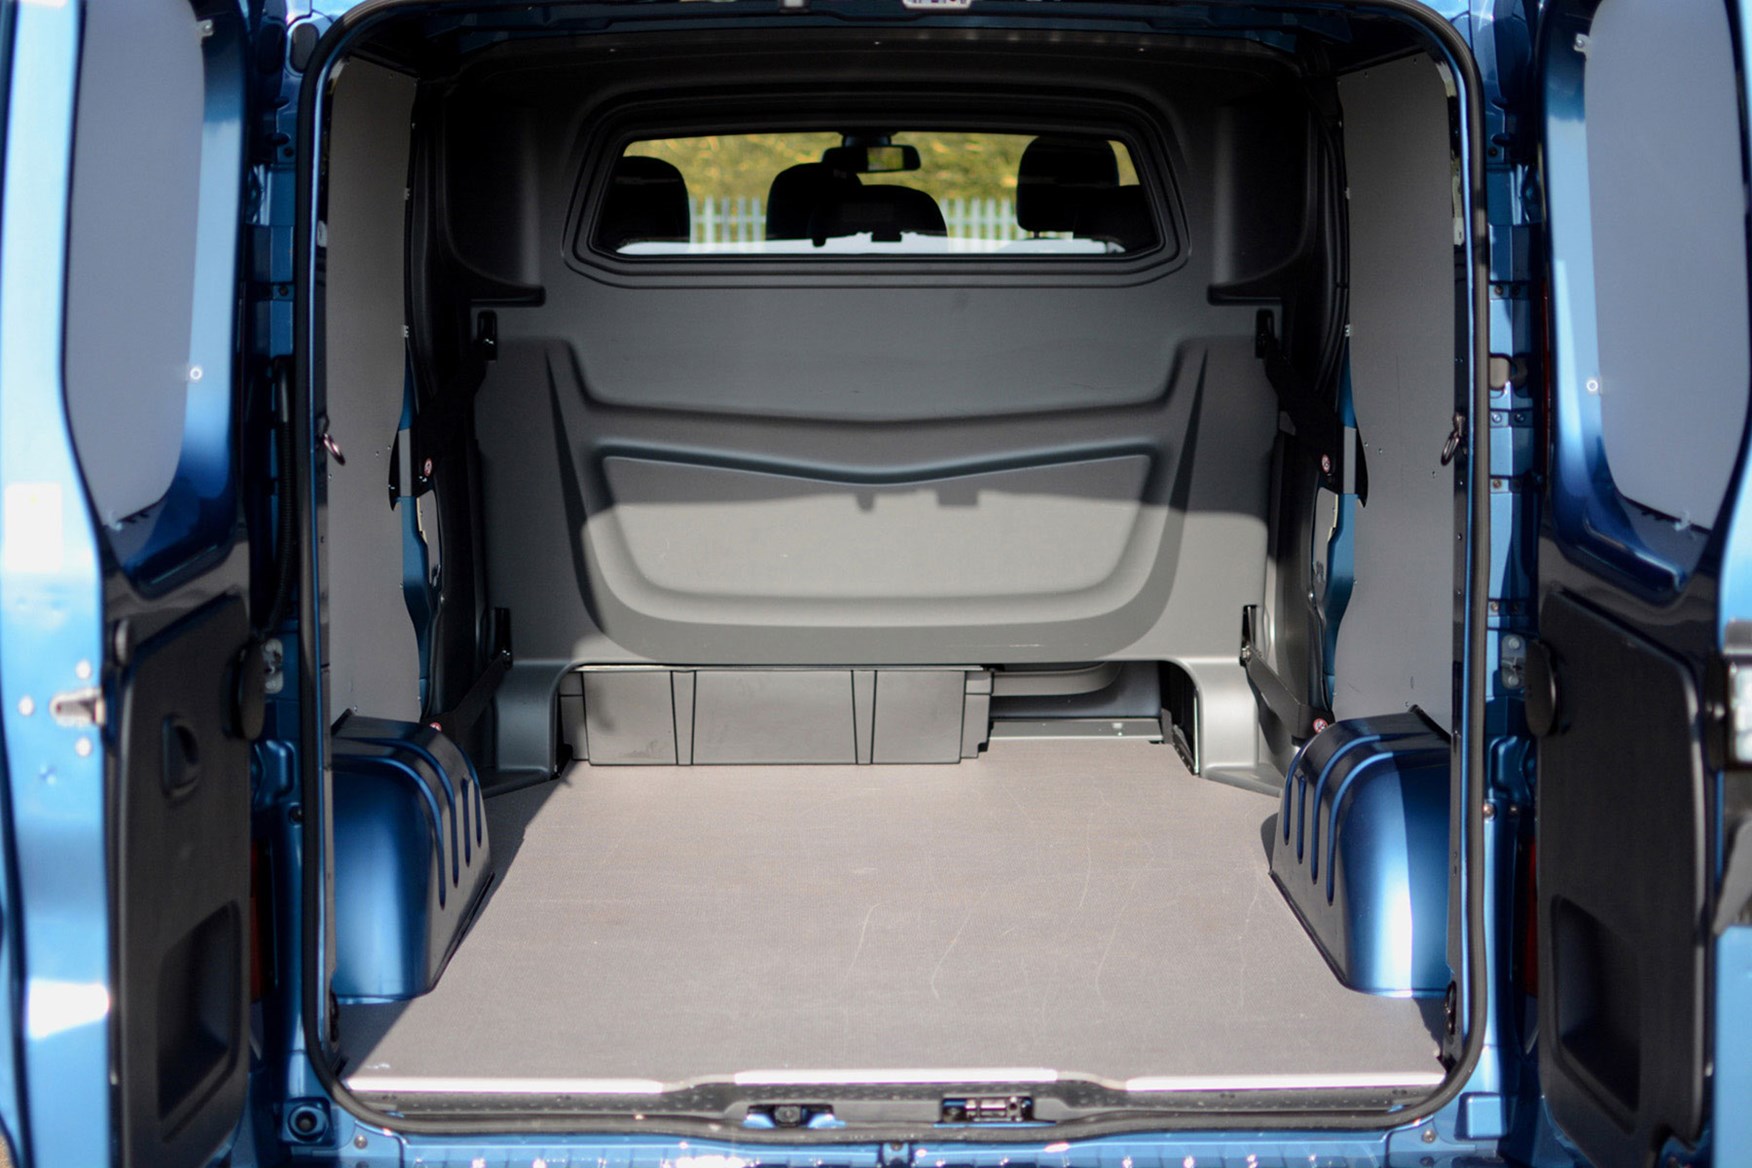 Vauxhall Vivaro Doublecab Sportive review - load area